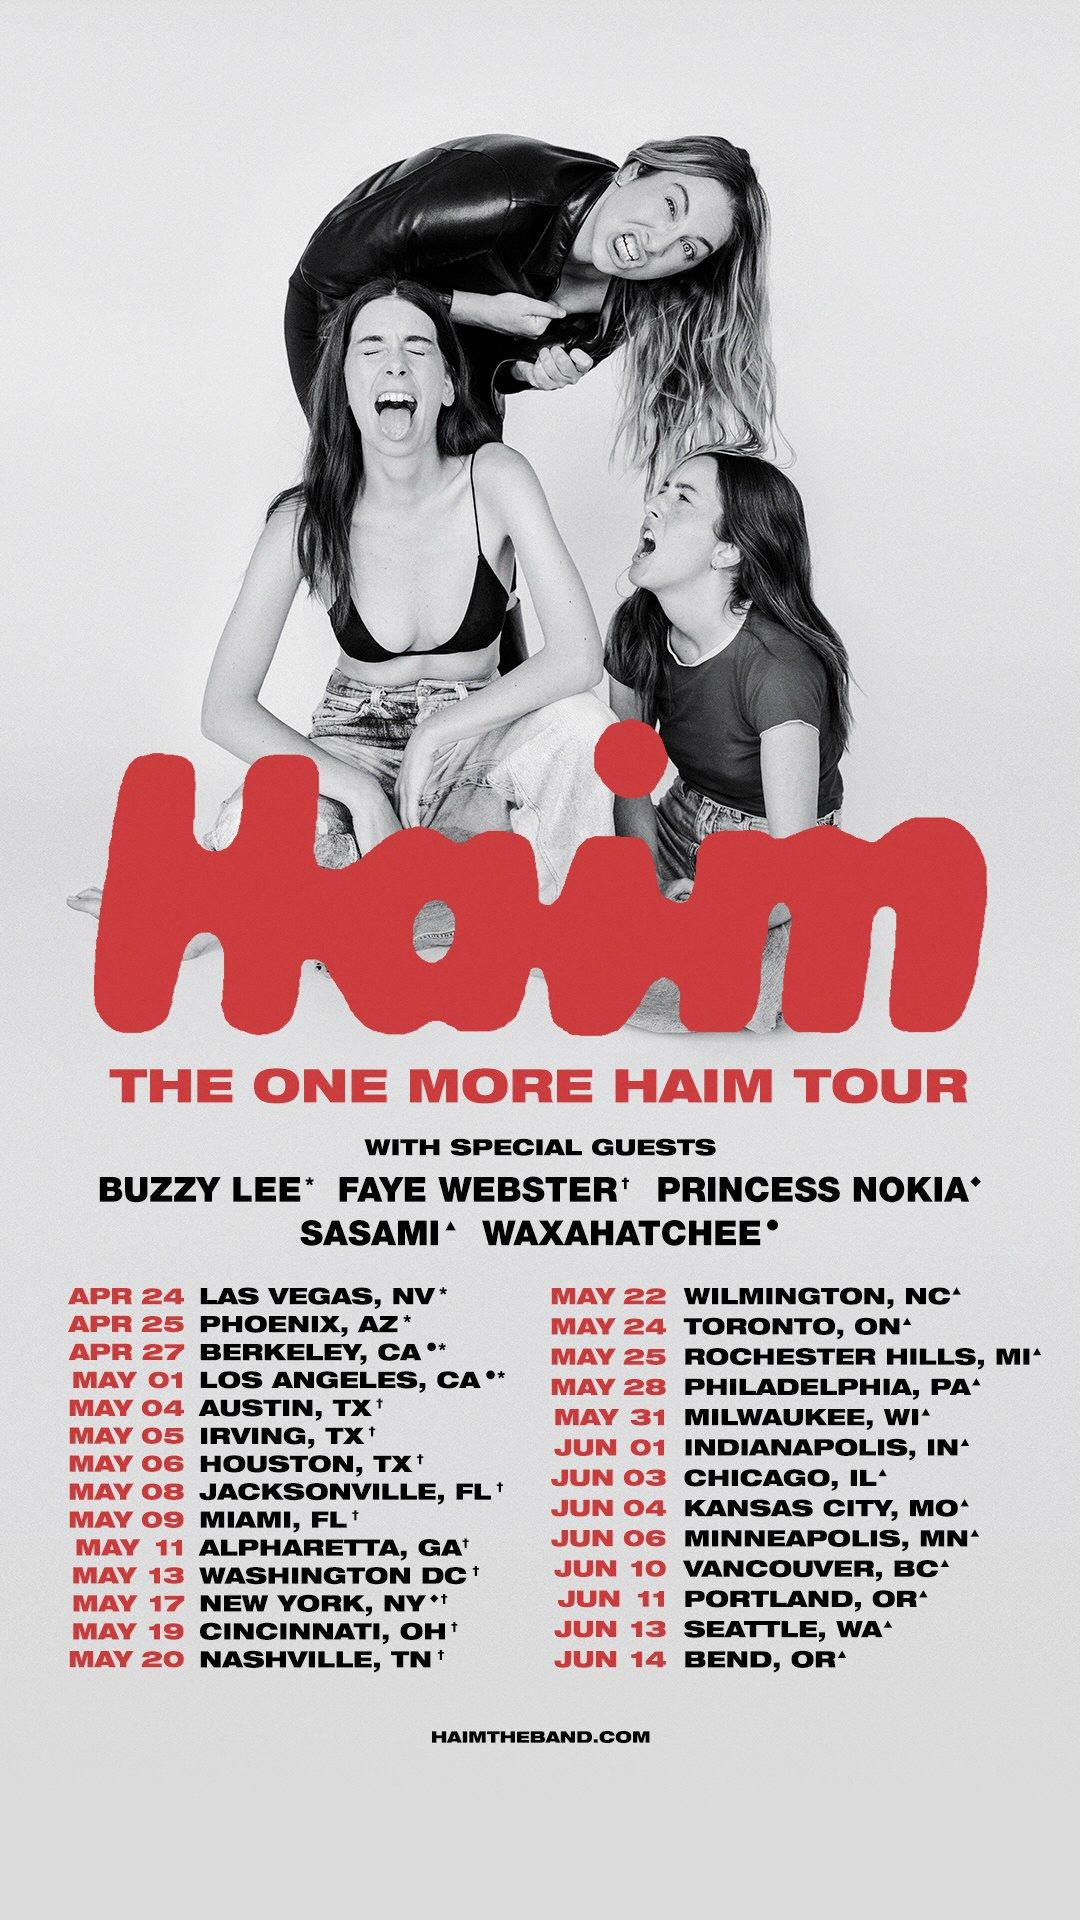 Haim - One More Hair Tour